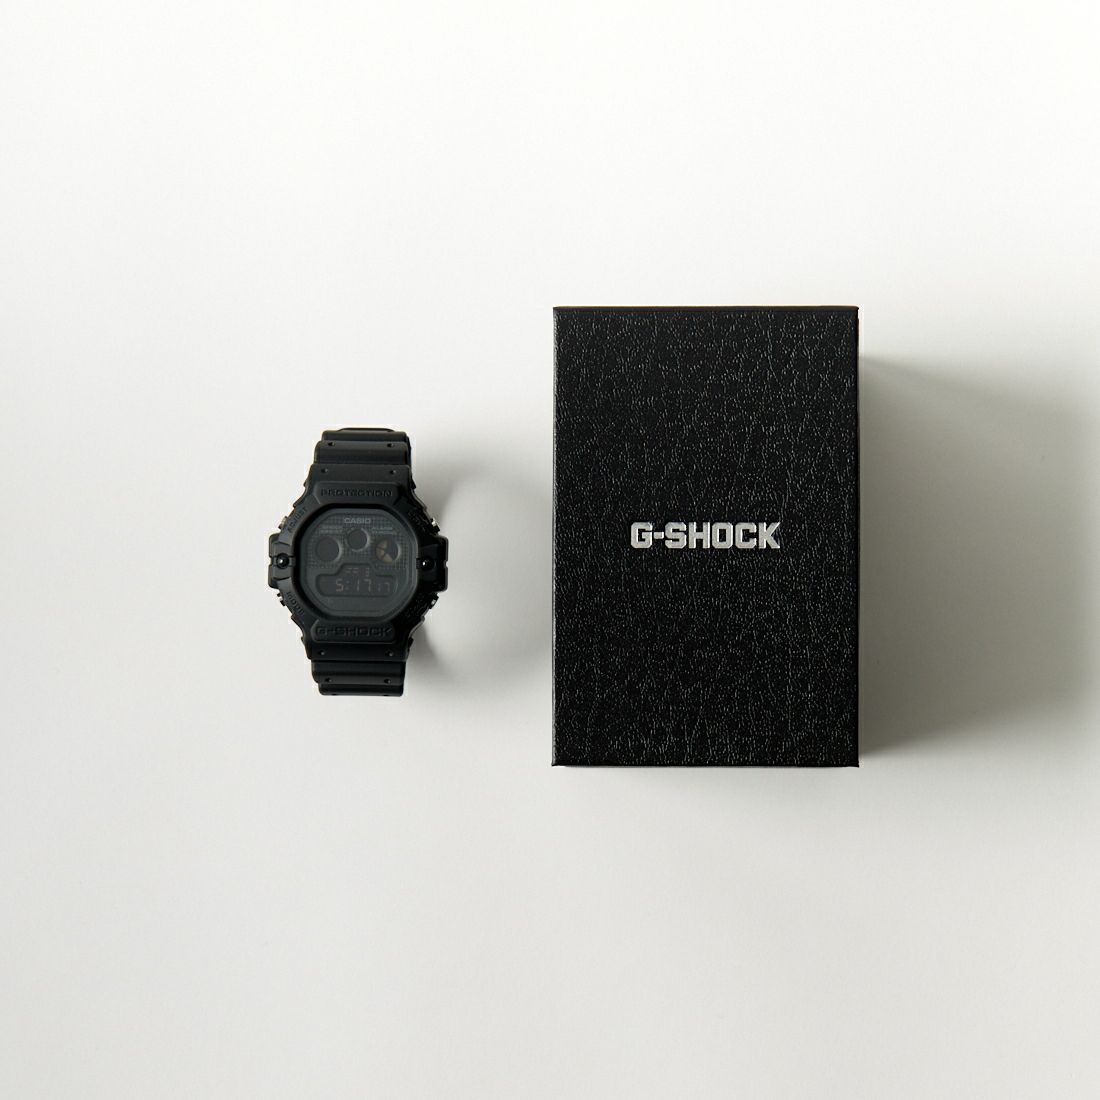 G-SHOCK [ジーショック] デジタルウォッチ [DW-5900BB-1JF] BLACK